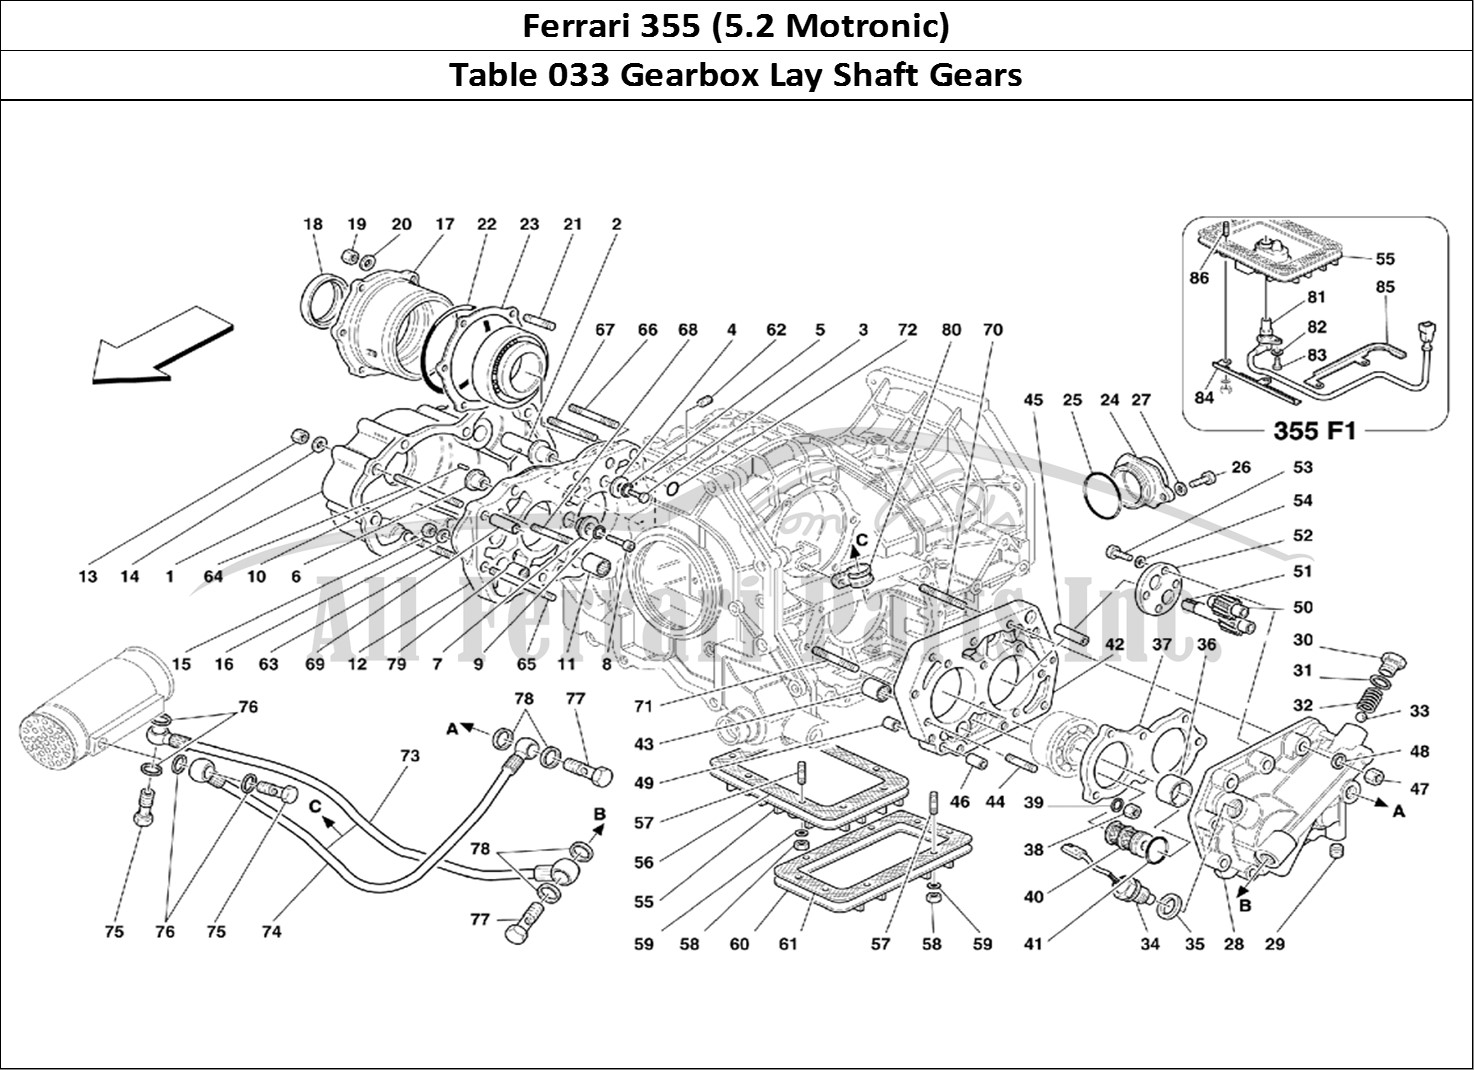 Ferrari Parts Ferrari 355 (5.2 Motronic) Page 033 Lay Shaft Gears